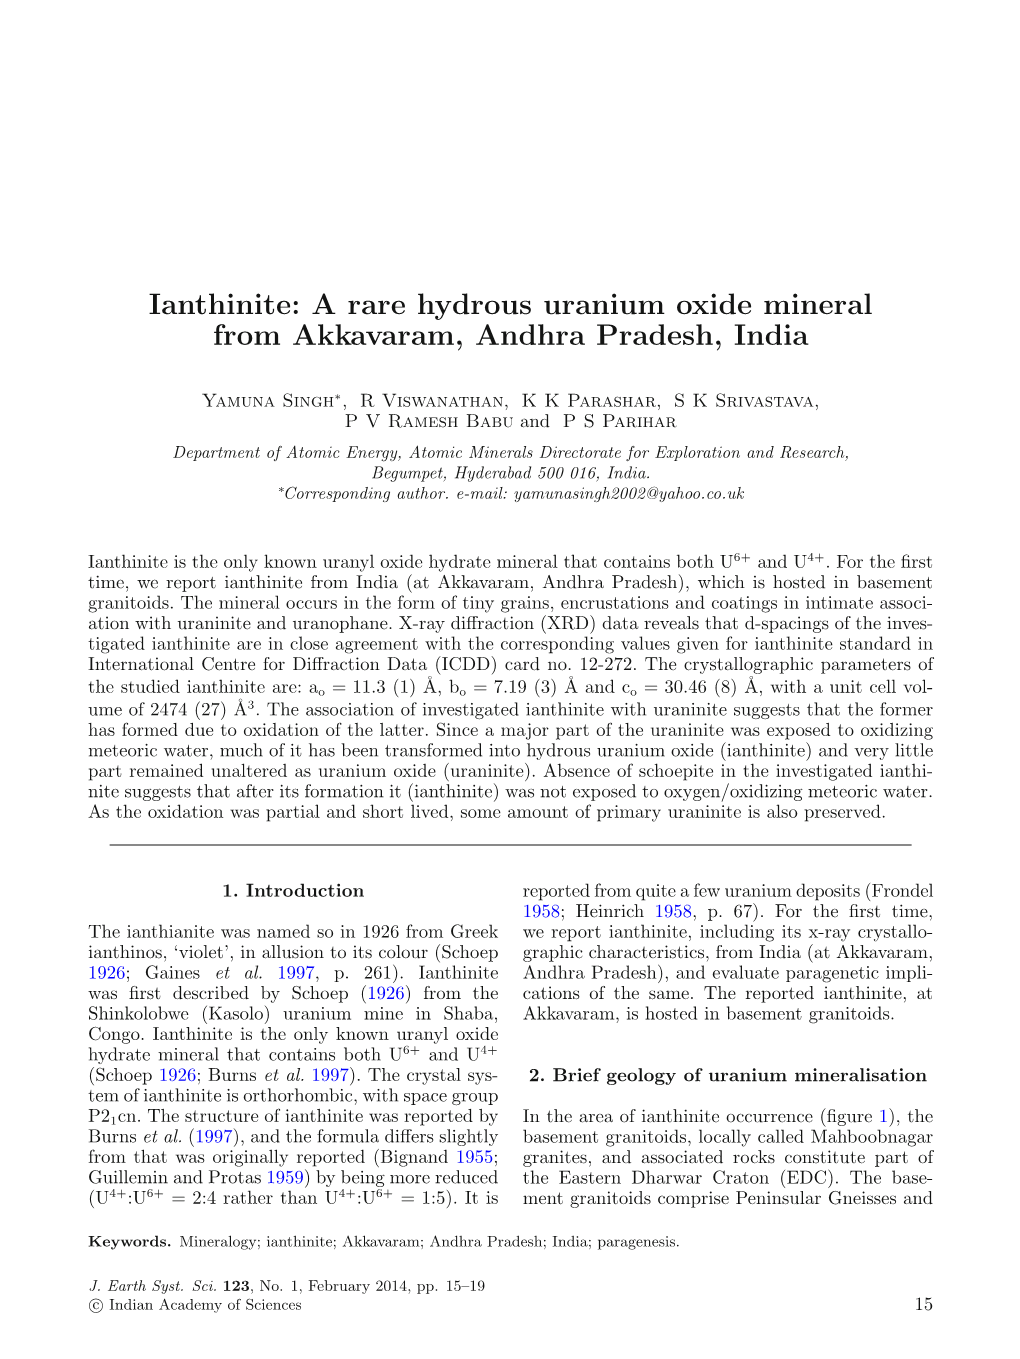 Ianthinite: a Rare Hydrous Uranium Oxide Mineral from Akkavaram, Andhra Pradesh, India